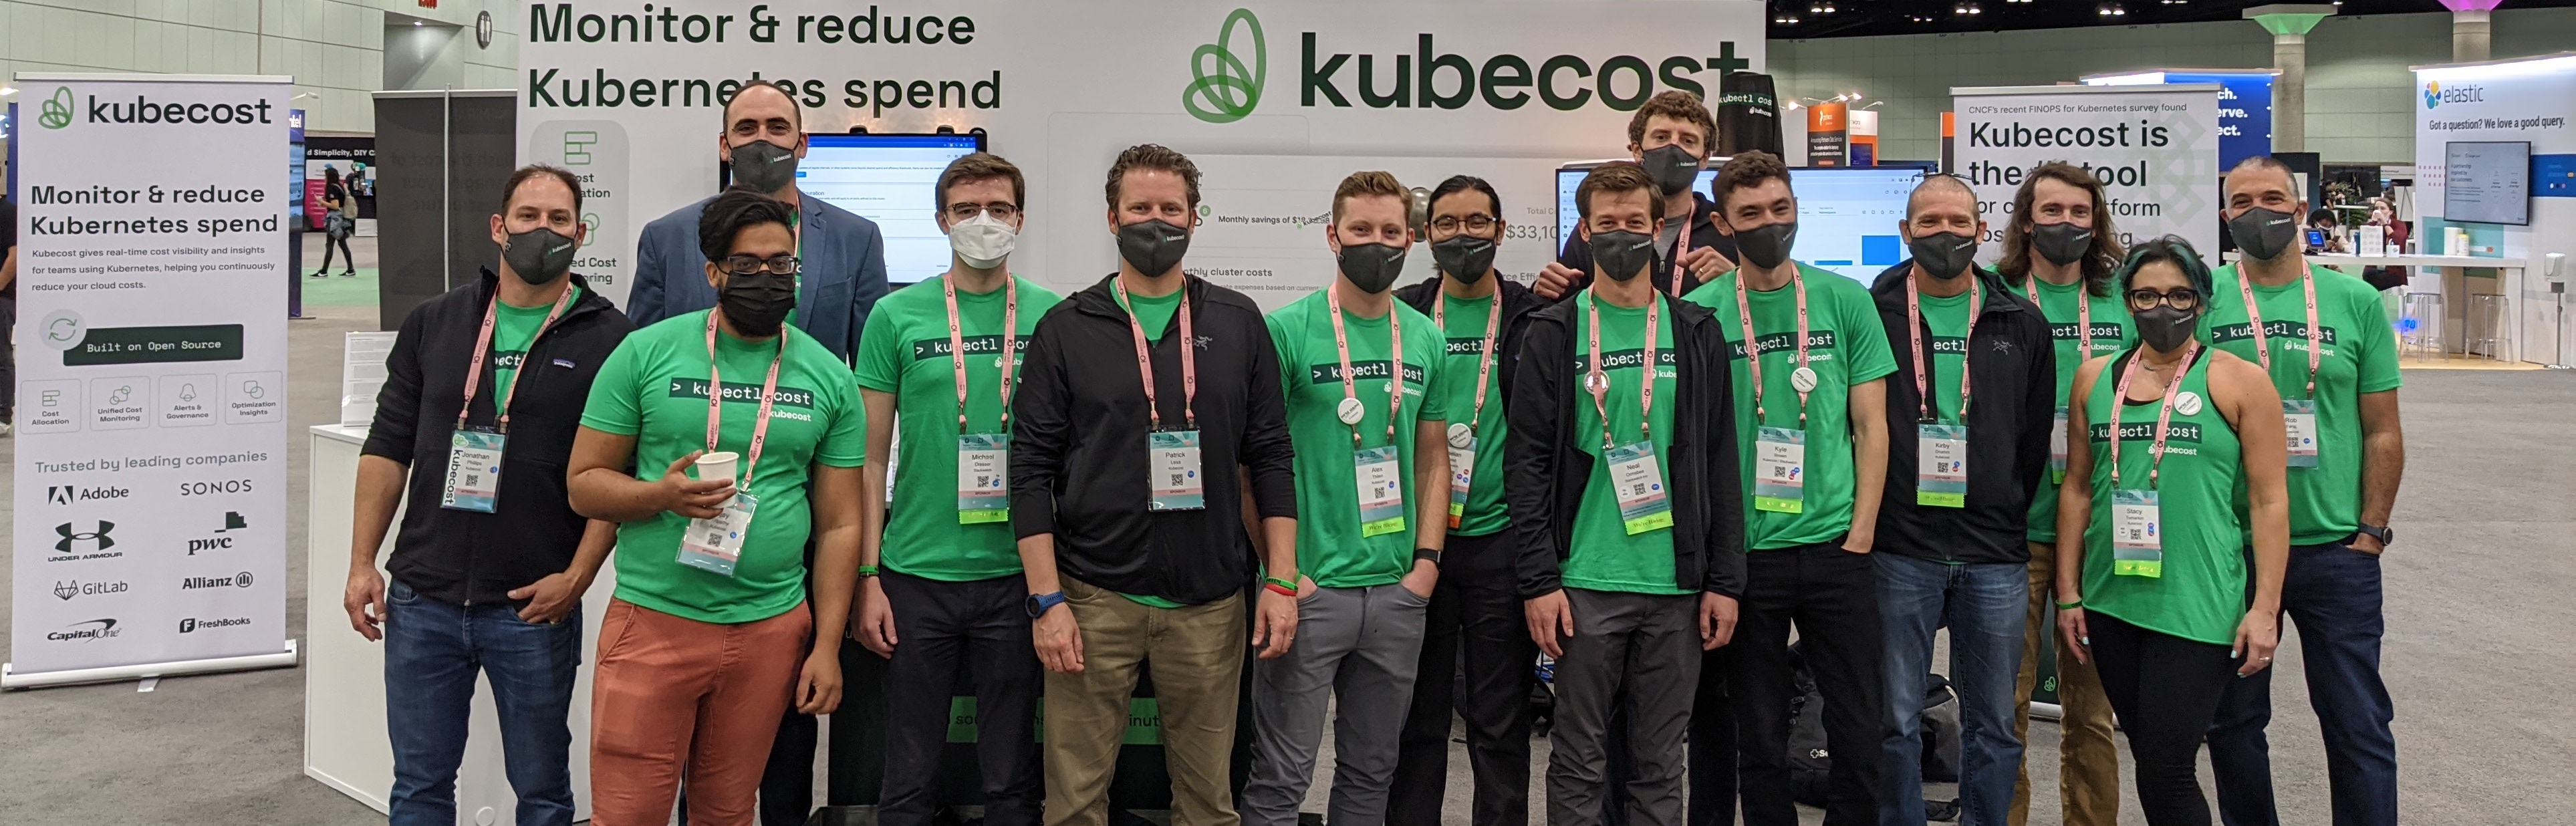 The Kubecost team at Kubecon 2021